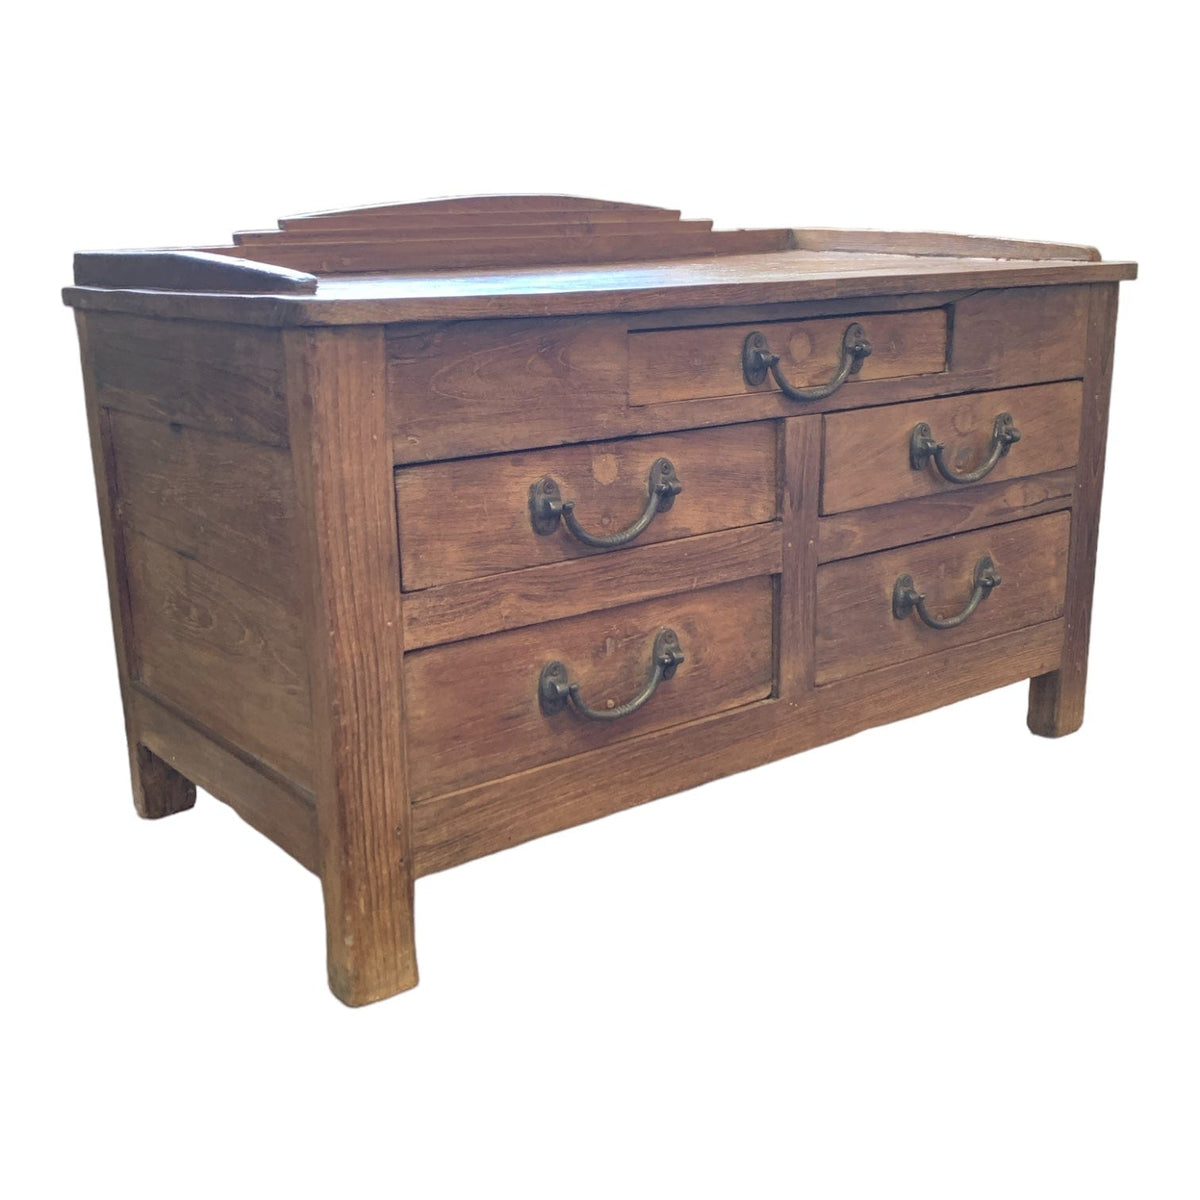 Original Small Wooden Desk